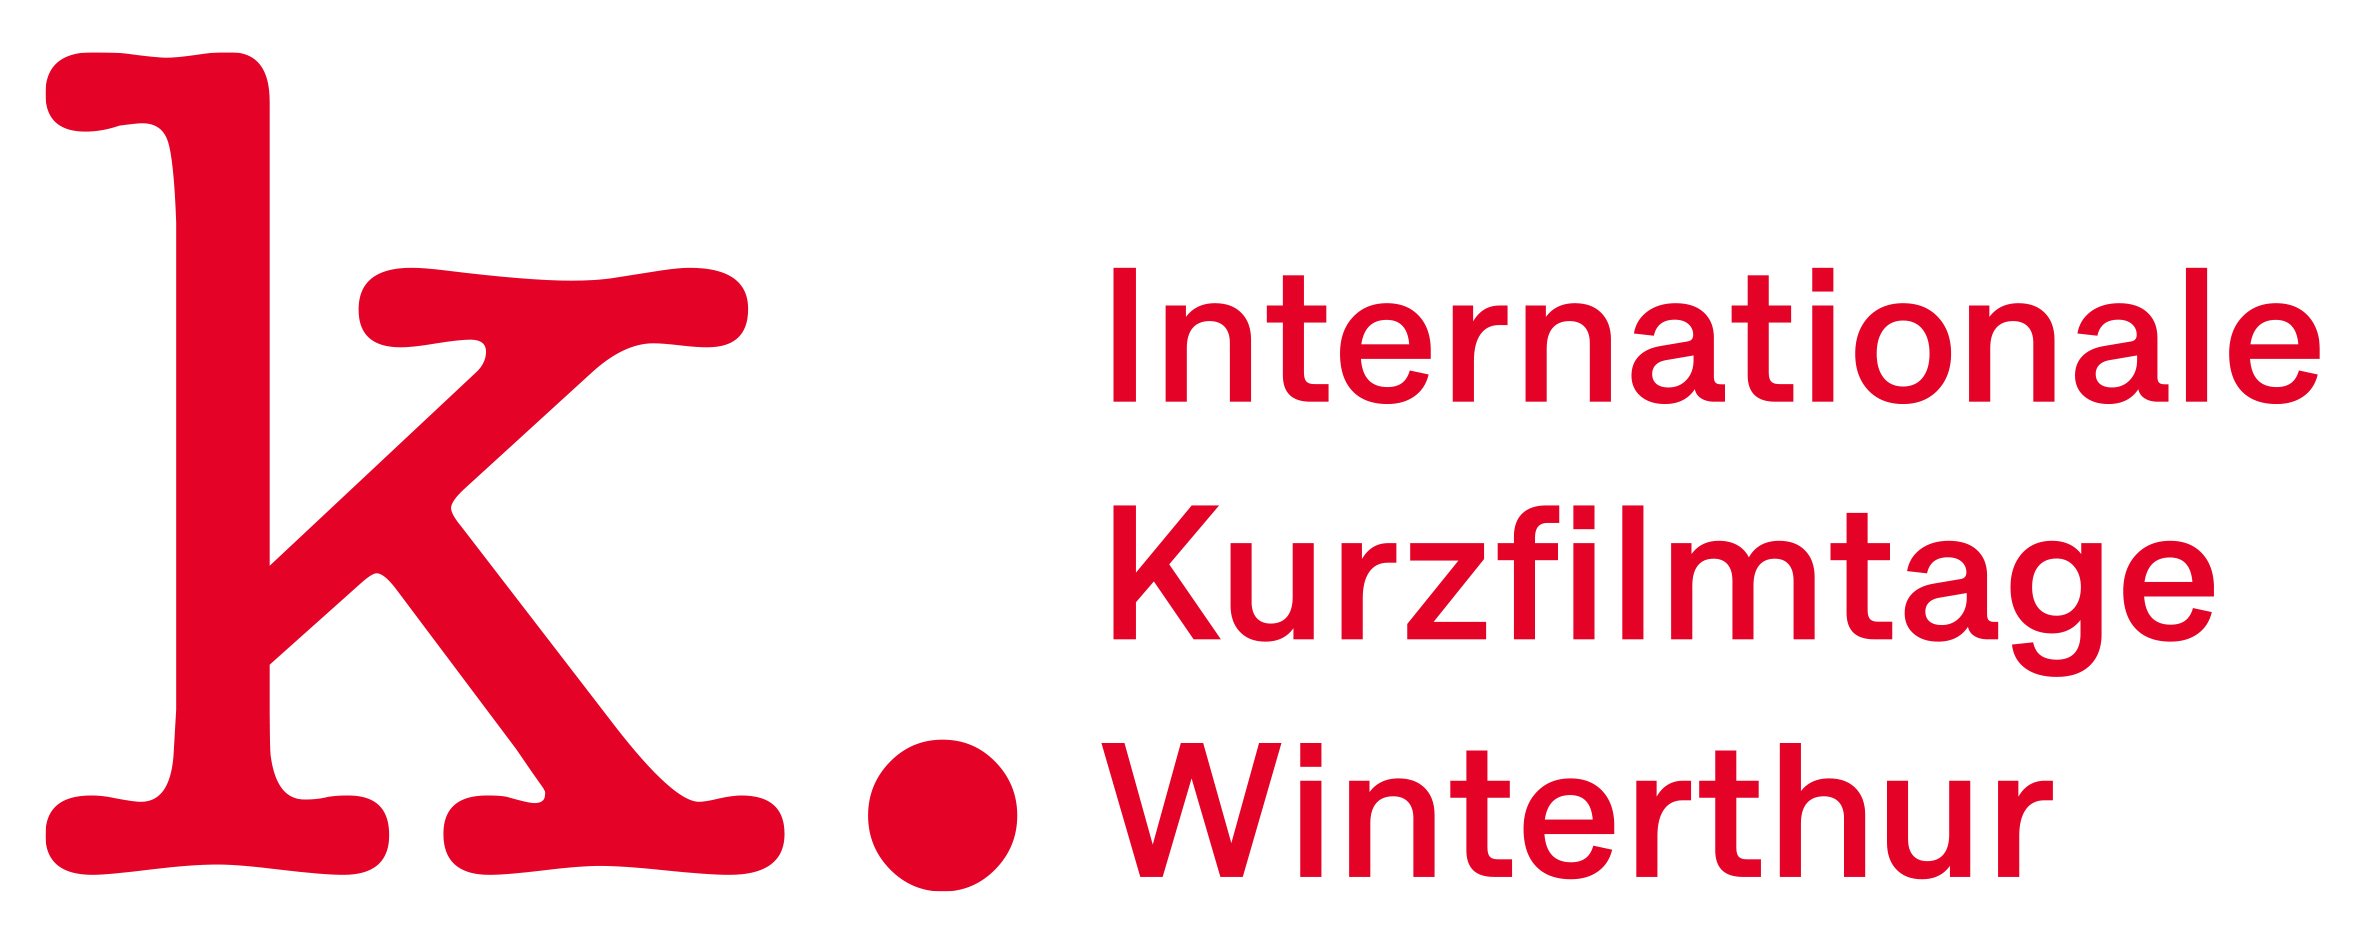 k_Logo_IKW_Claim_red.jpg